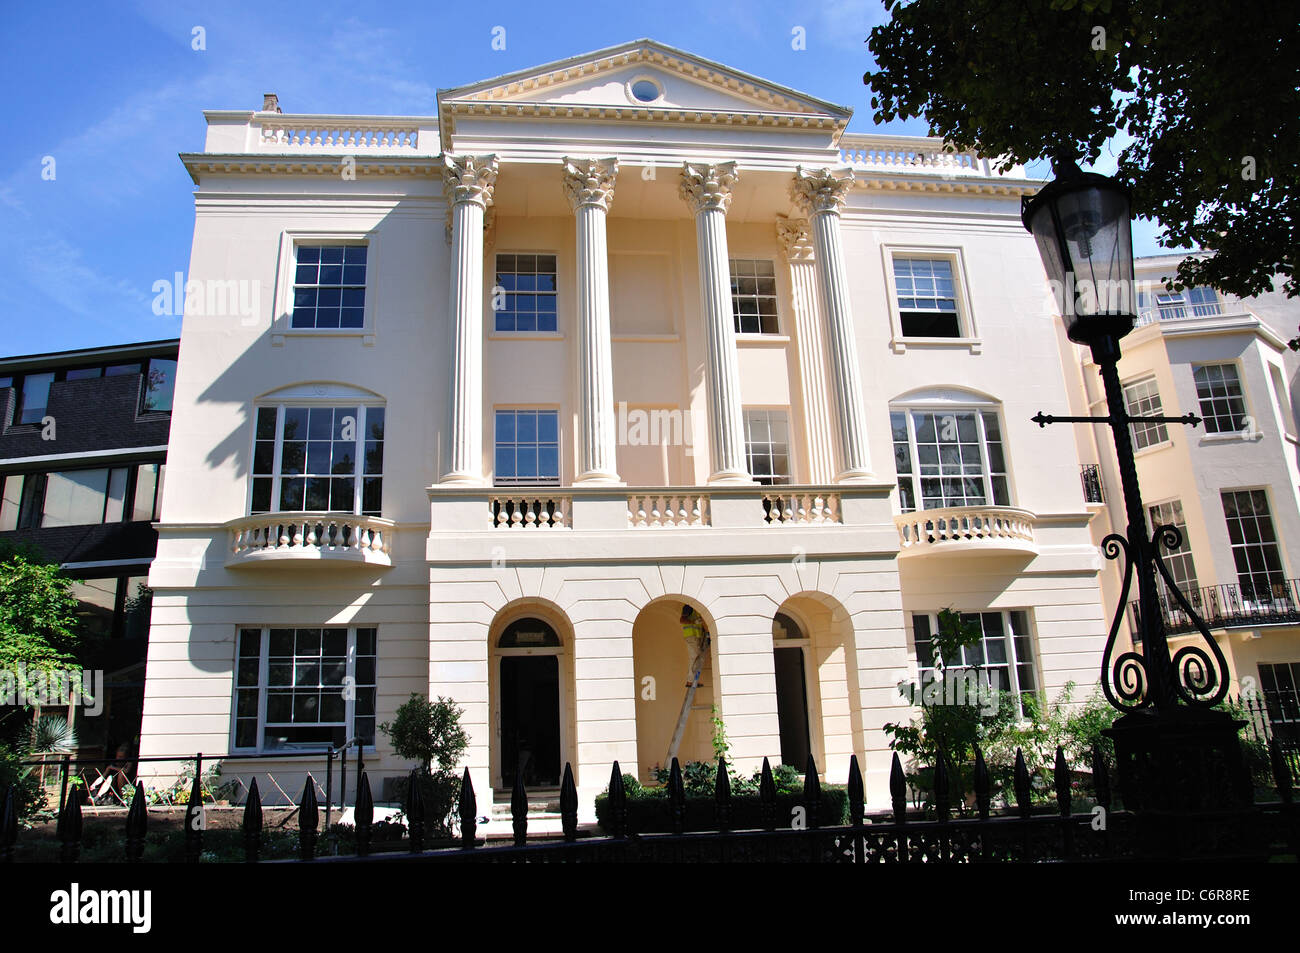 Bâtiment de style Régence, St.Andrew's Place, Regent's Park, City of Westminster, London, Greater London, Angleterre, Royaume-Uni Banque D'Images